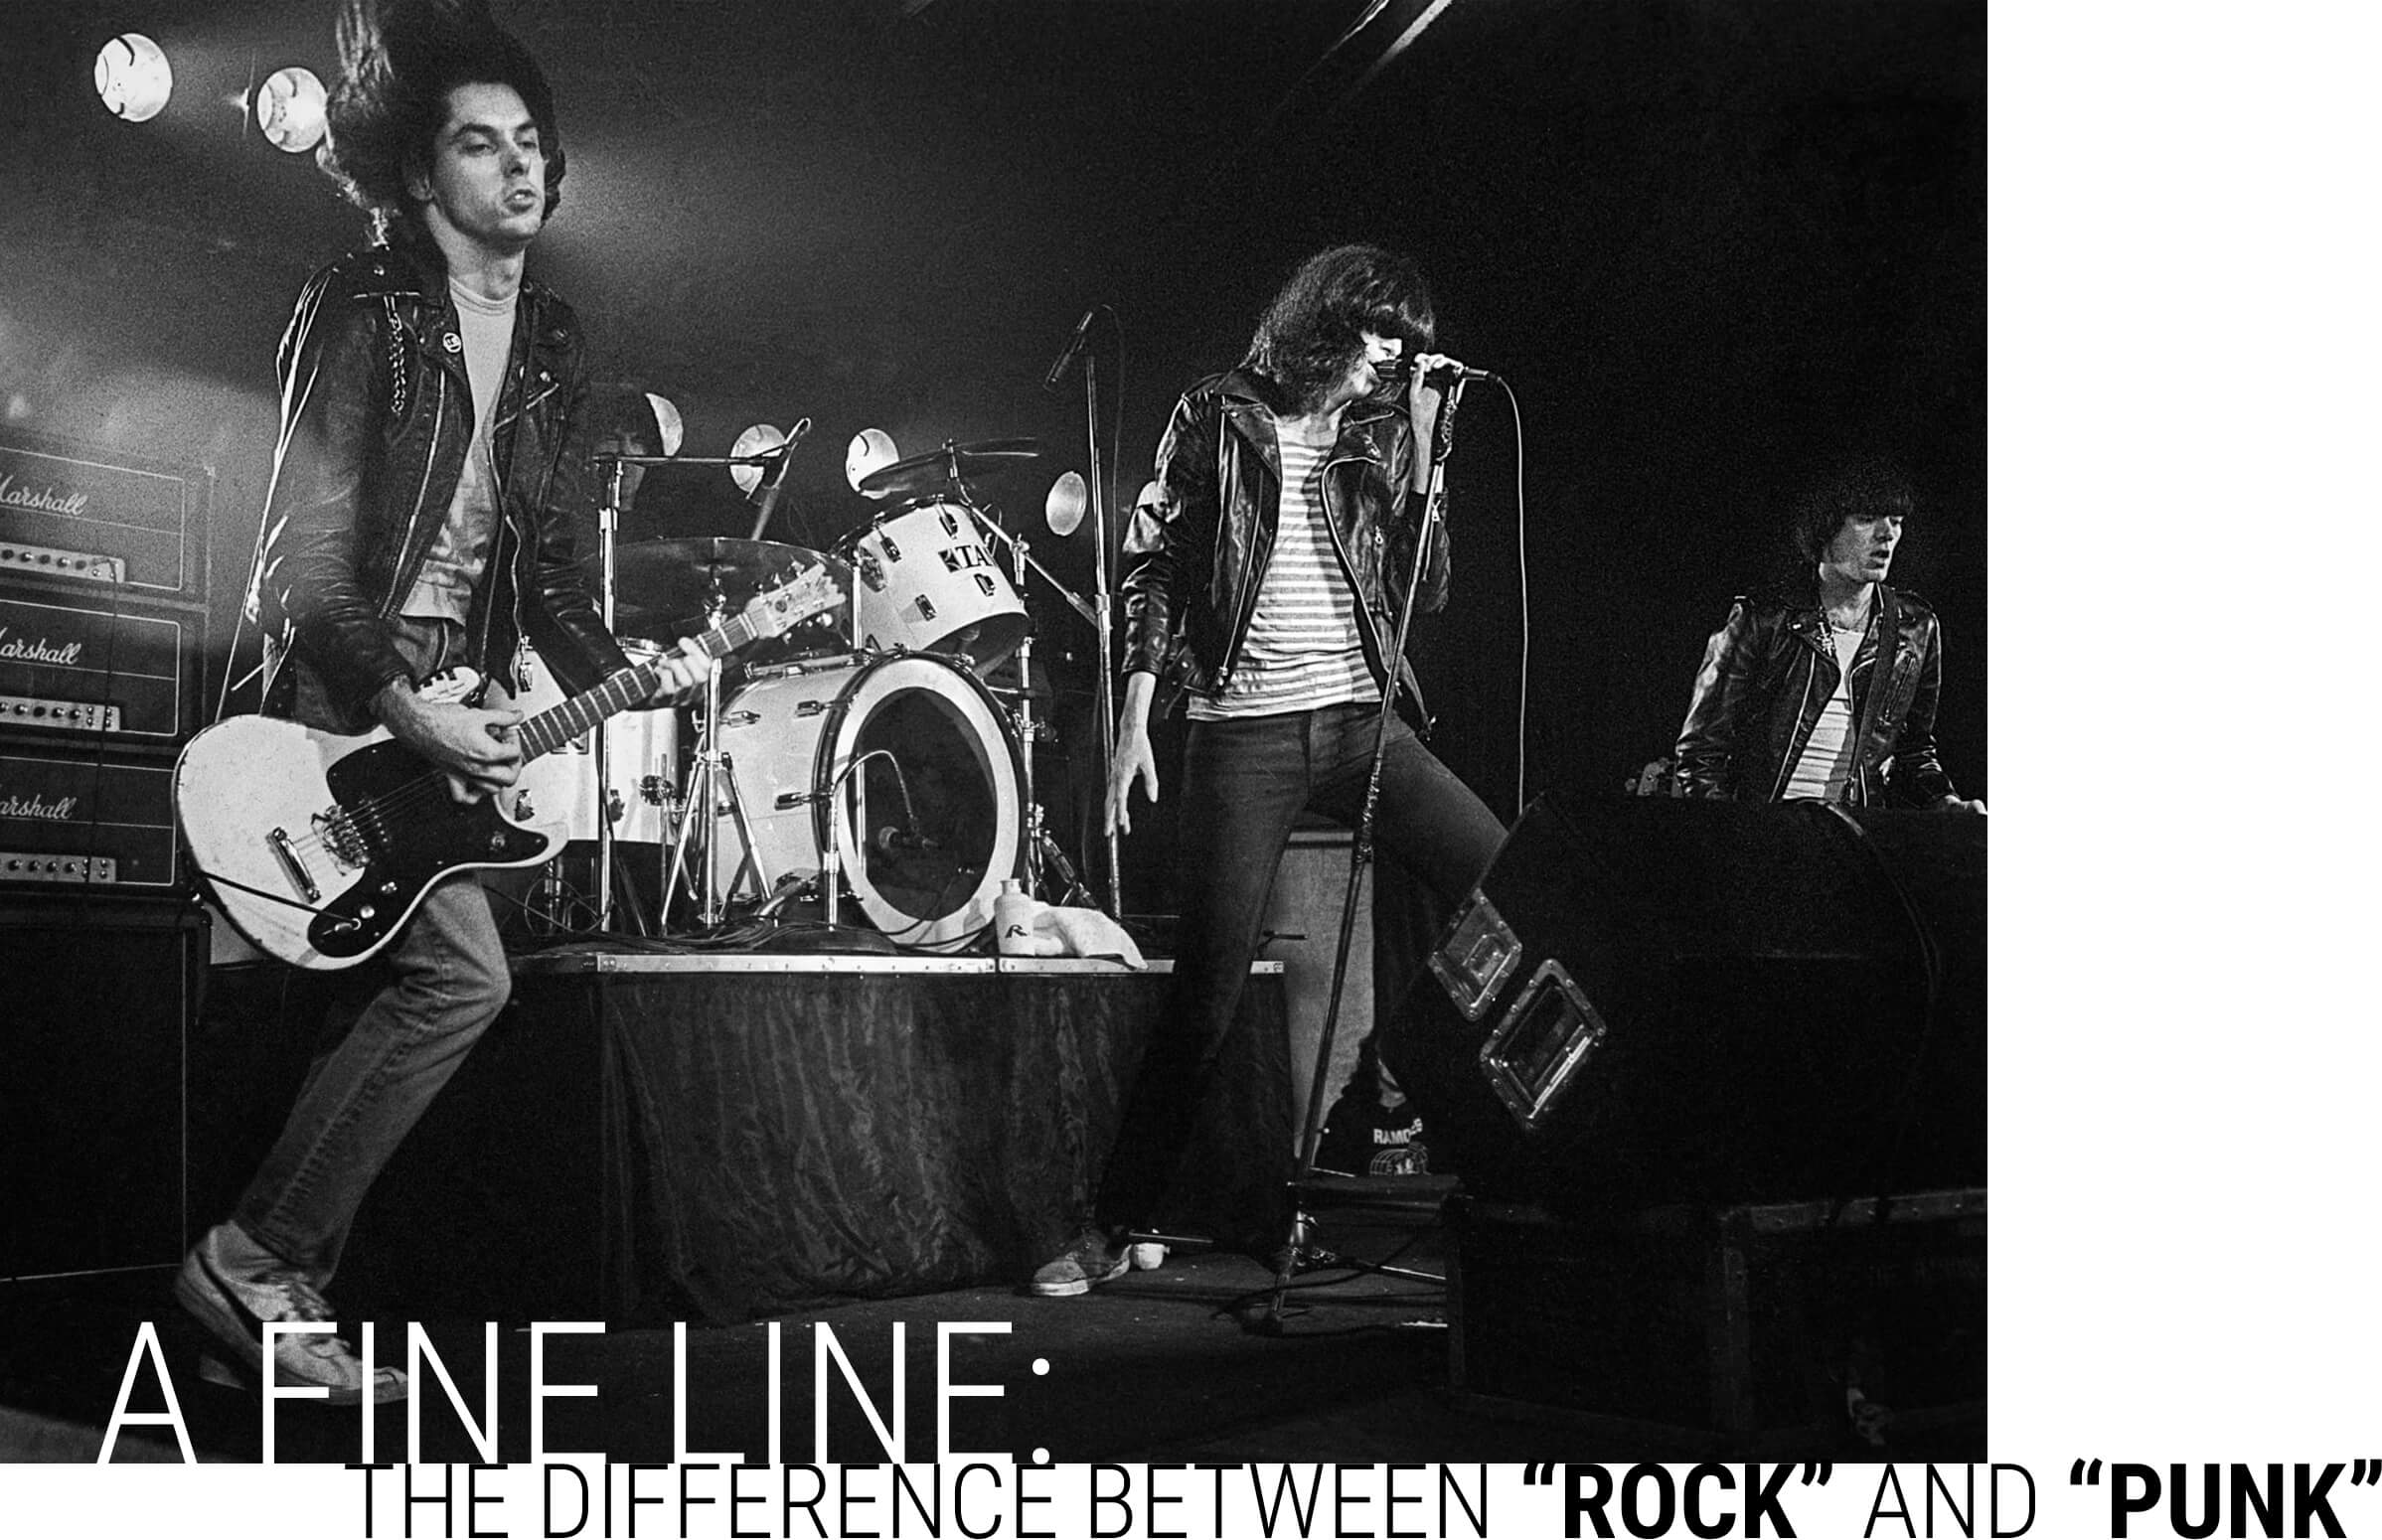 Ramones making punk rock history